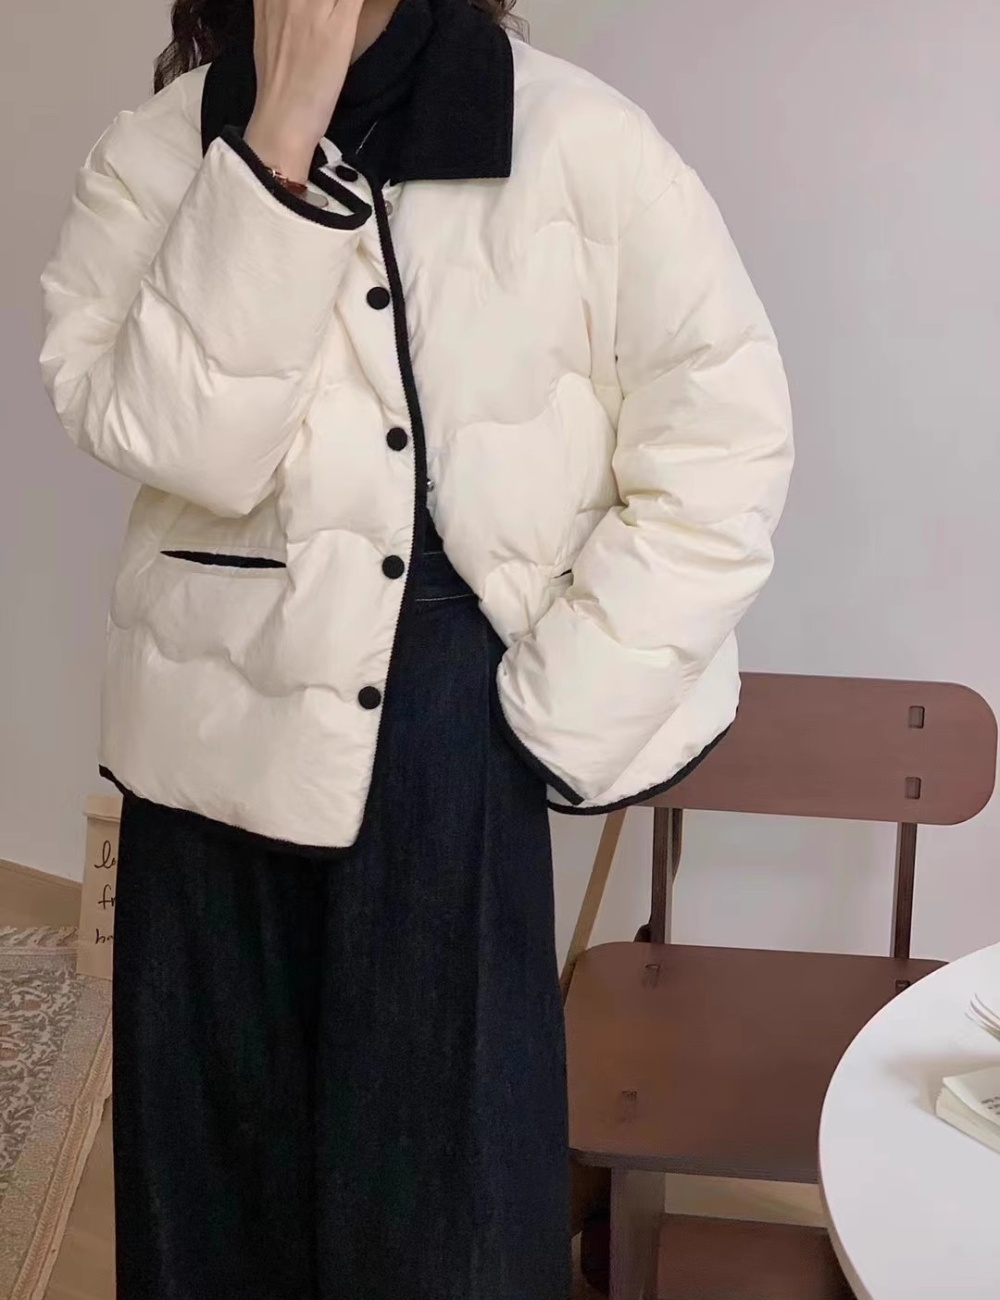 Chanelstyle cotton coat winter coat